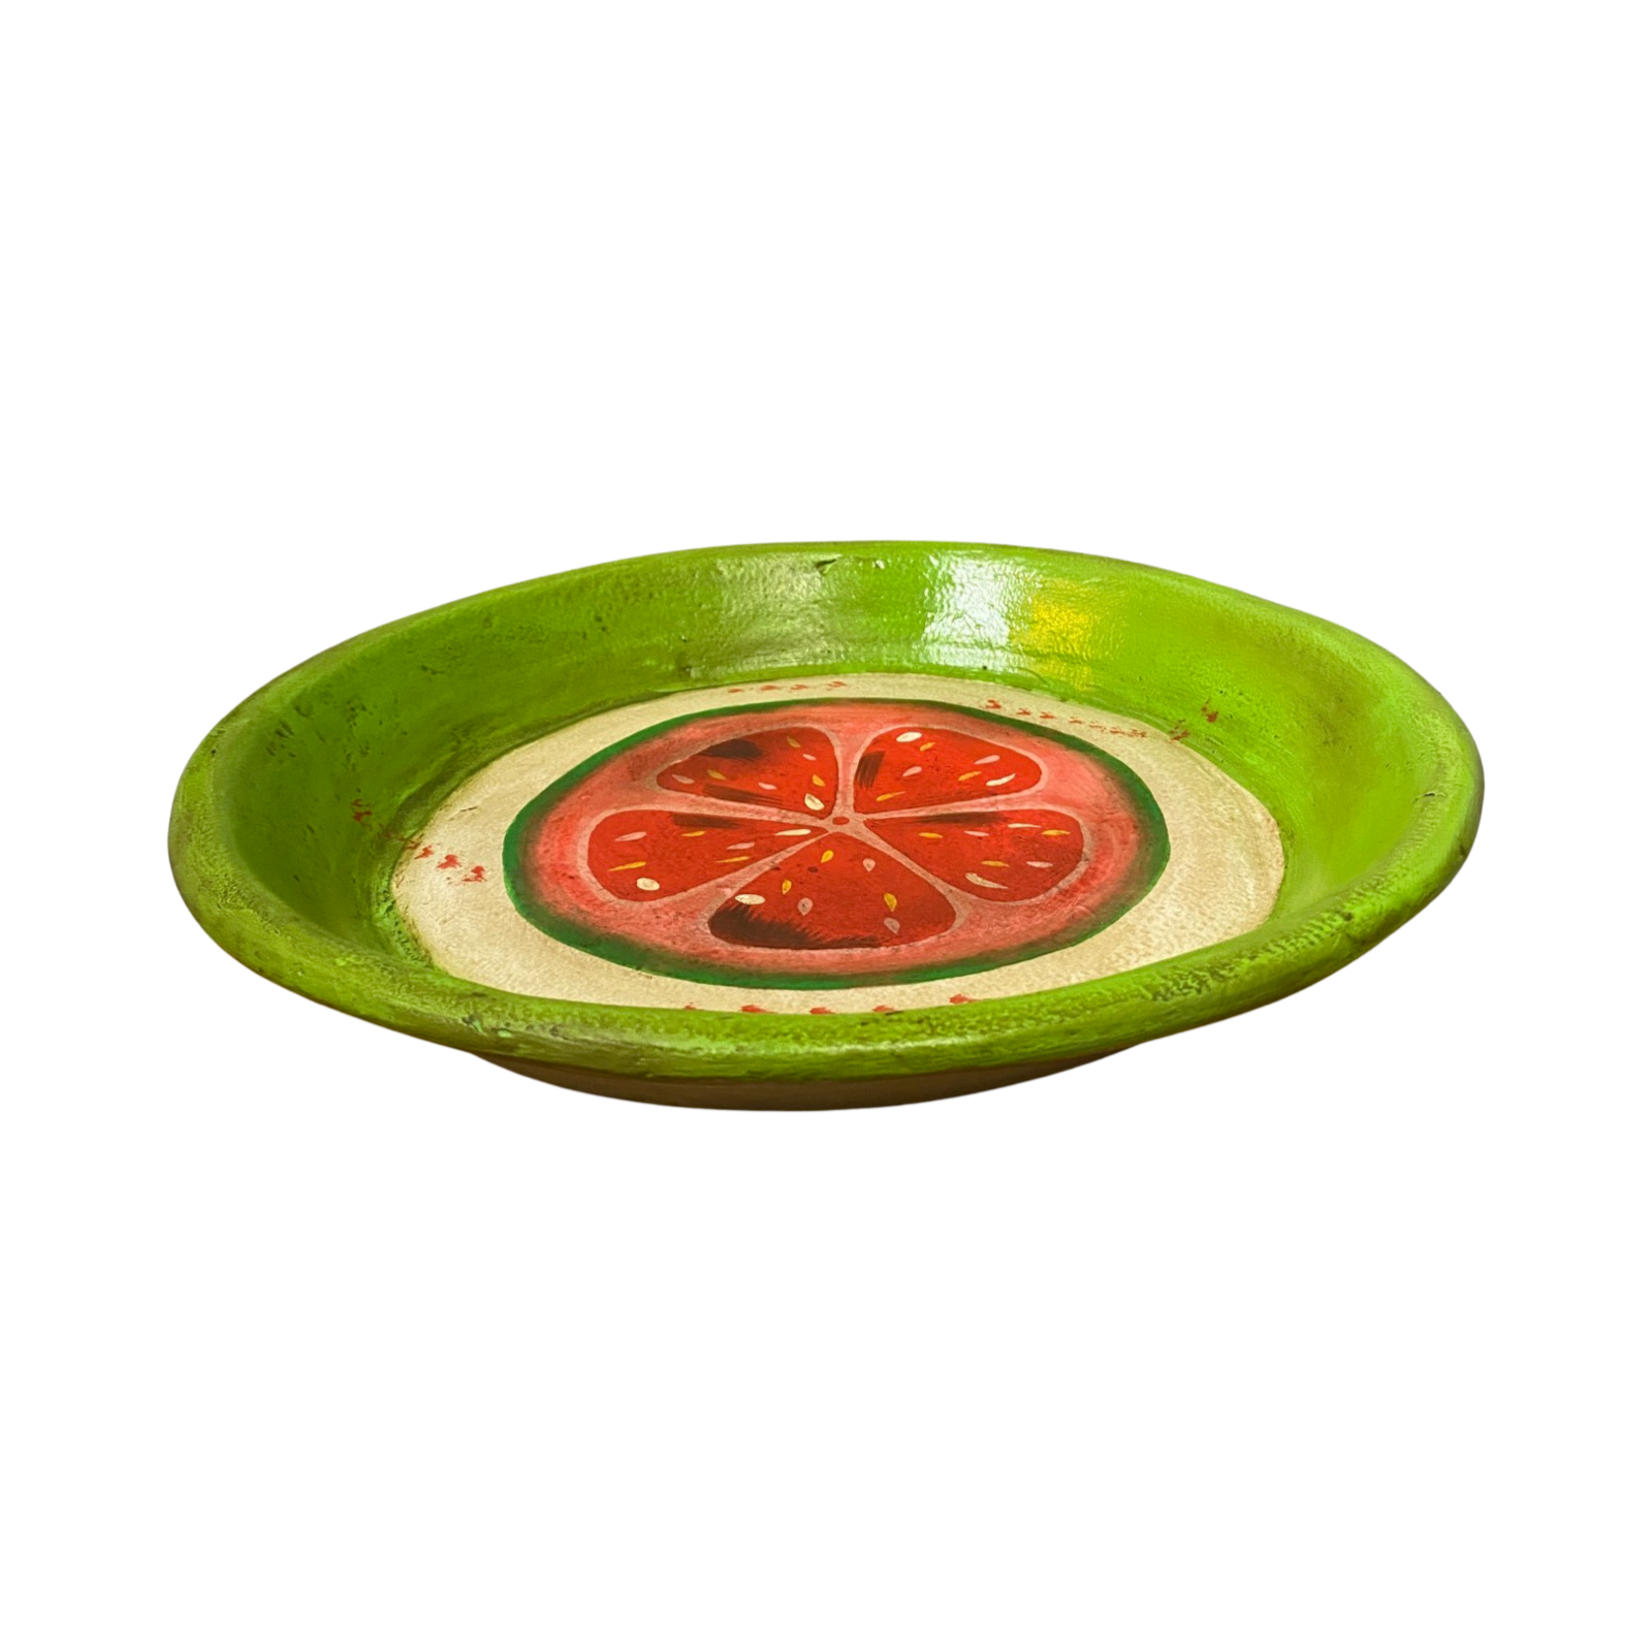 Purpers Choice Groene tray met meloen 37 cm